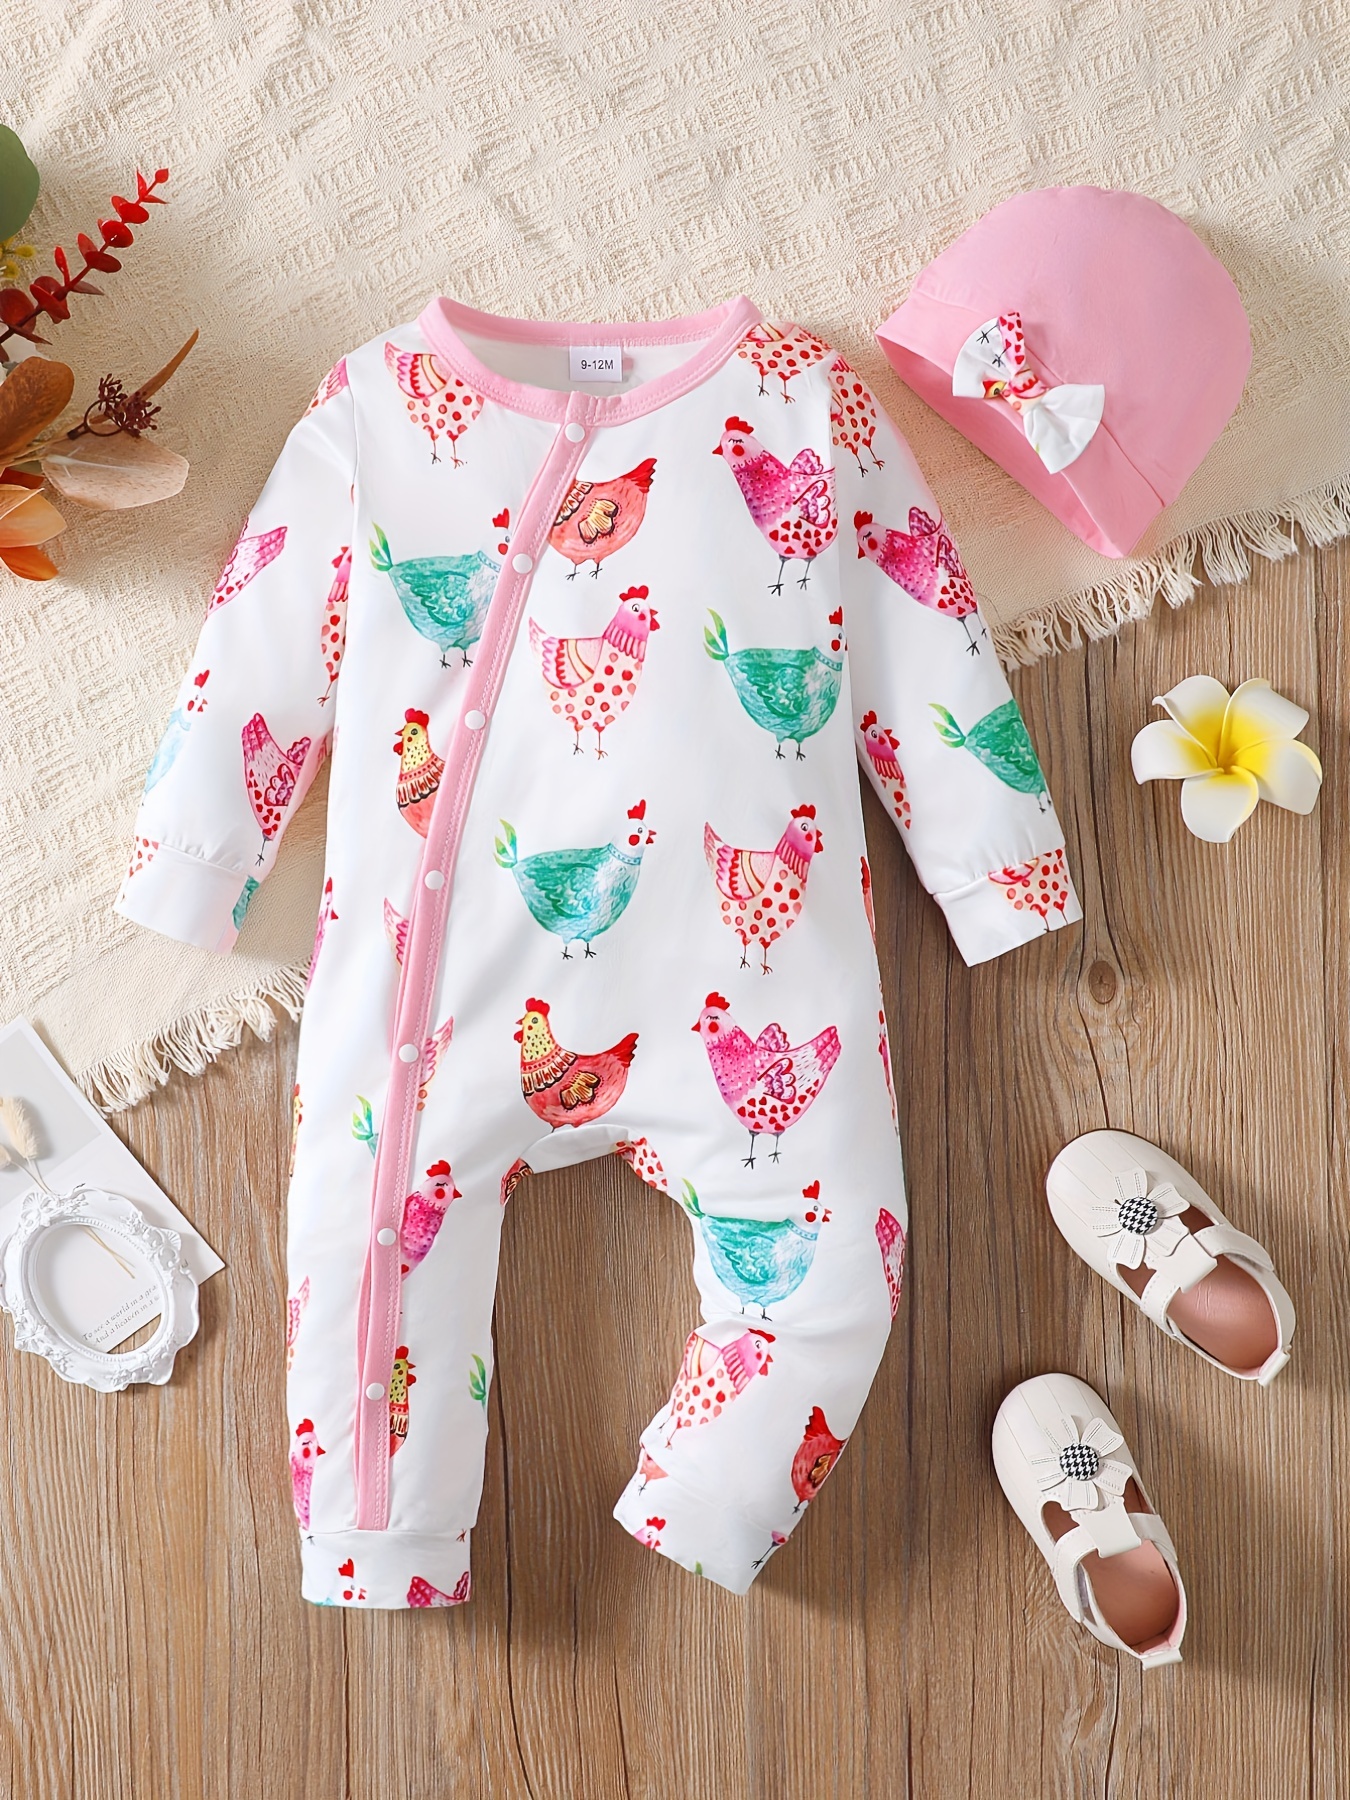 Newborn Infant Baby Girl Floral Romper Jumpsuit+Leg Warmers 3Pcs Outfits Set